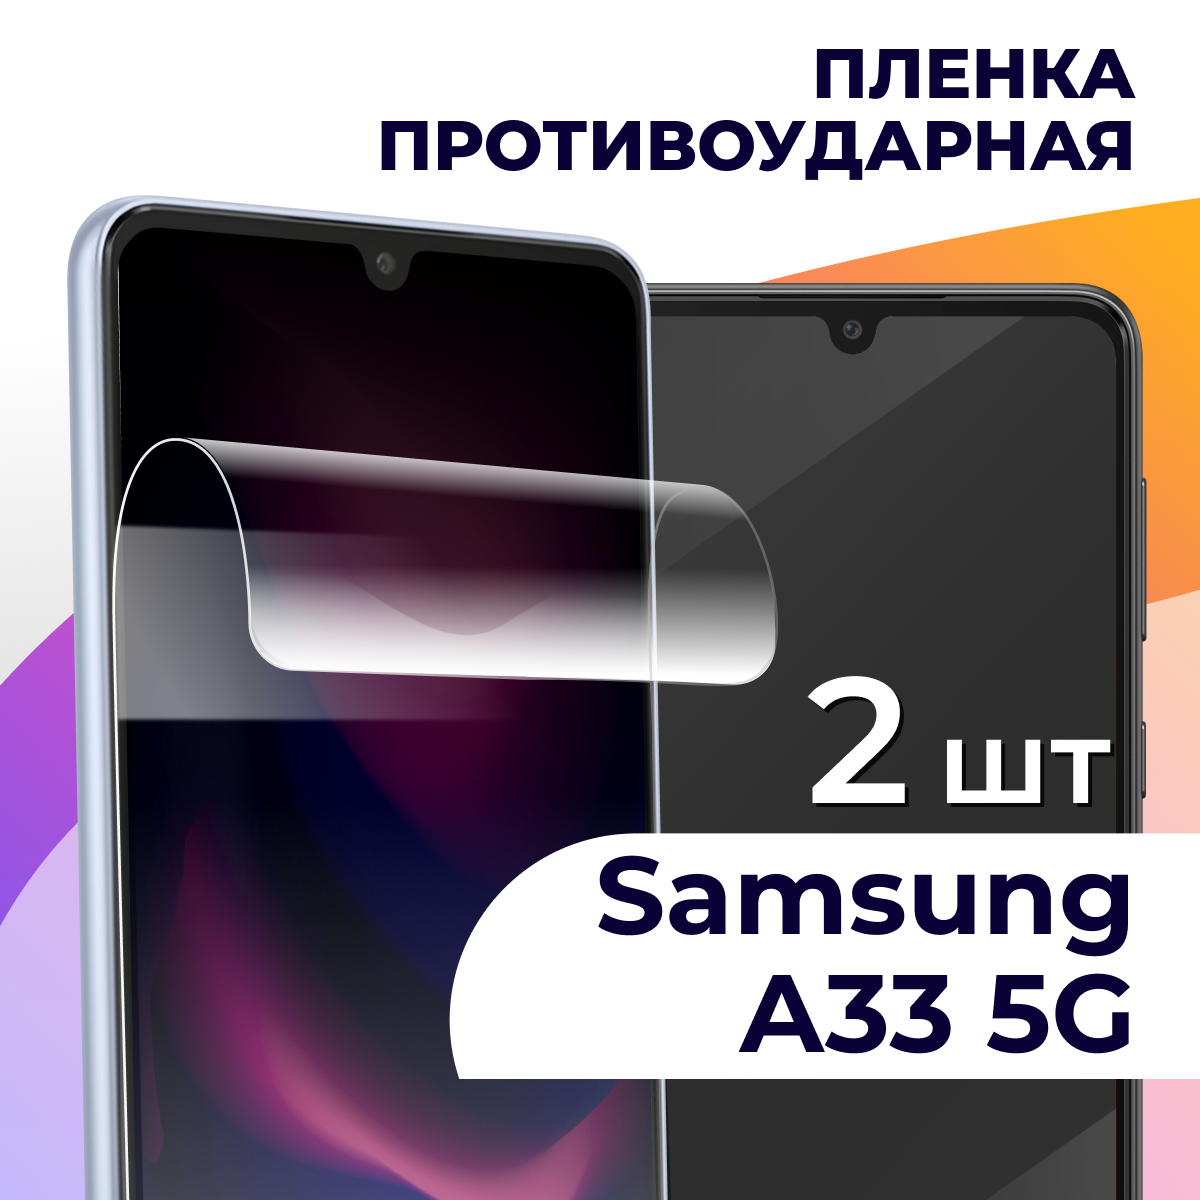 Комплект 2 шт. Гидрогелевая пленка для смартфона Samsung Galaxy A33 5G / Противоударная пленка на телефон Самсунг Галакси А33 5Г / Защитная пленка